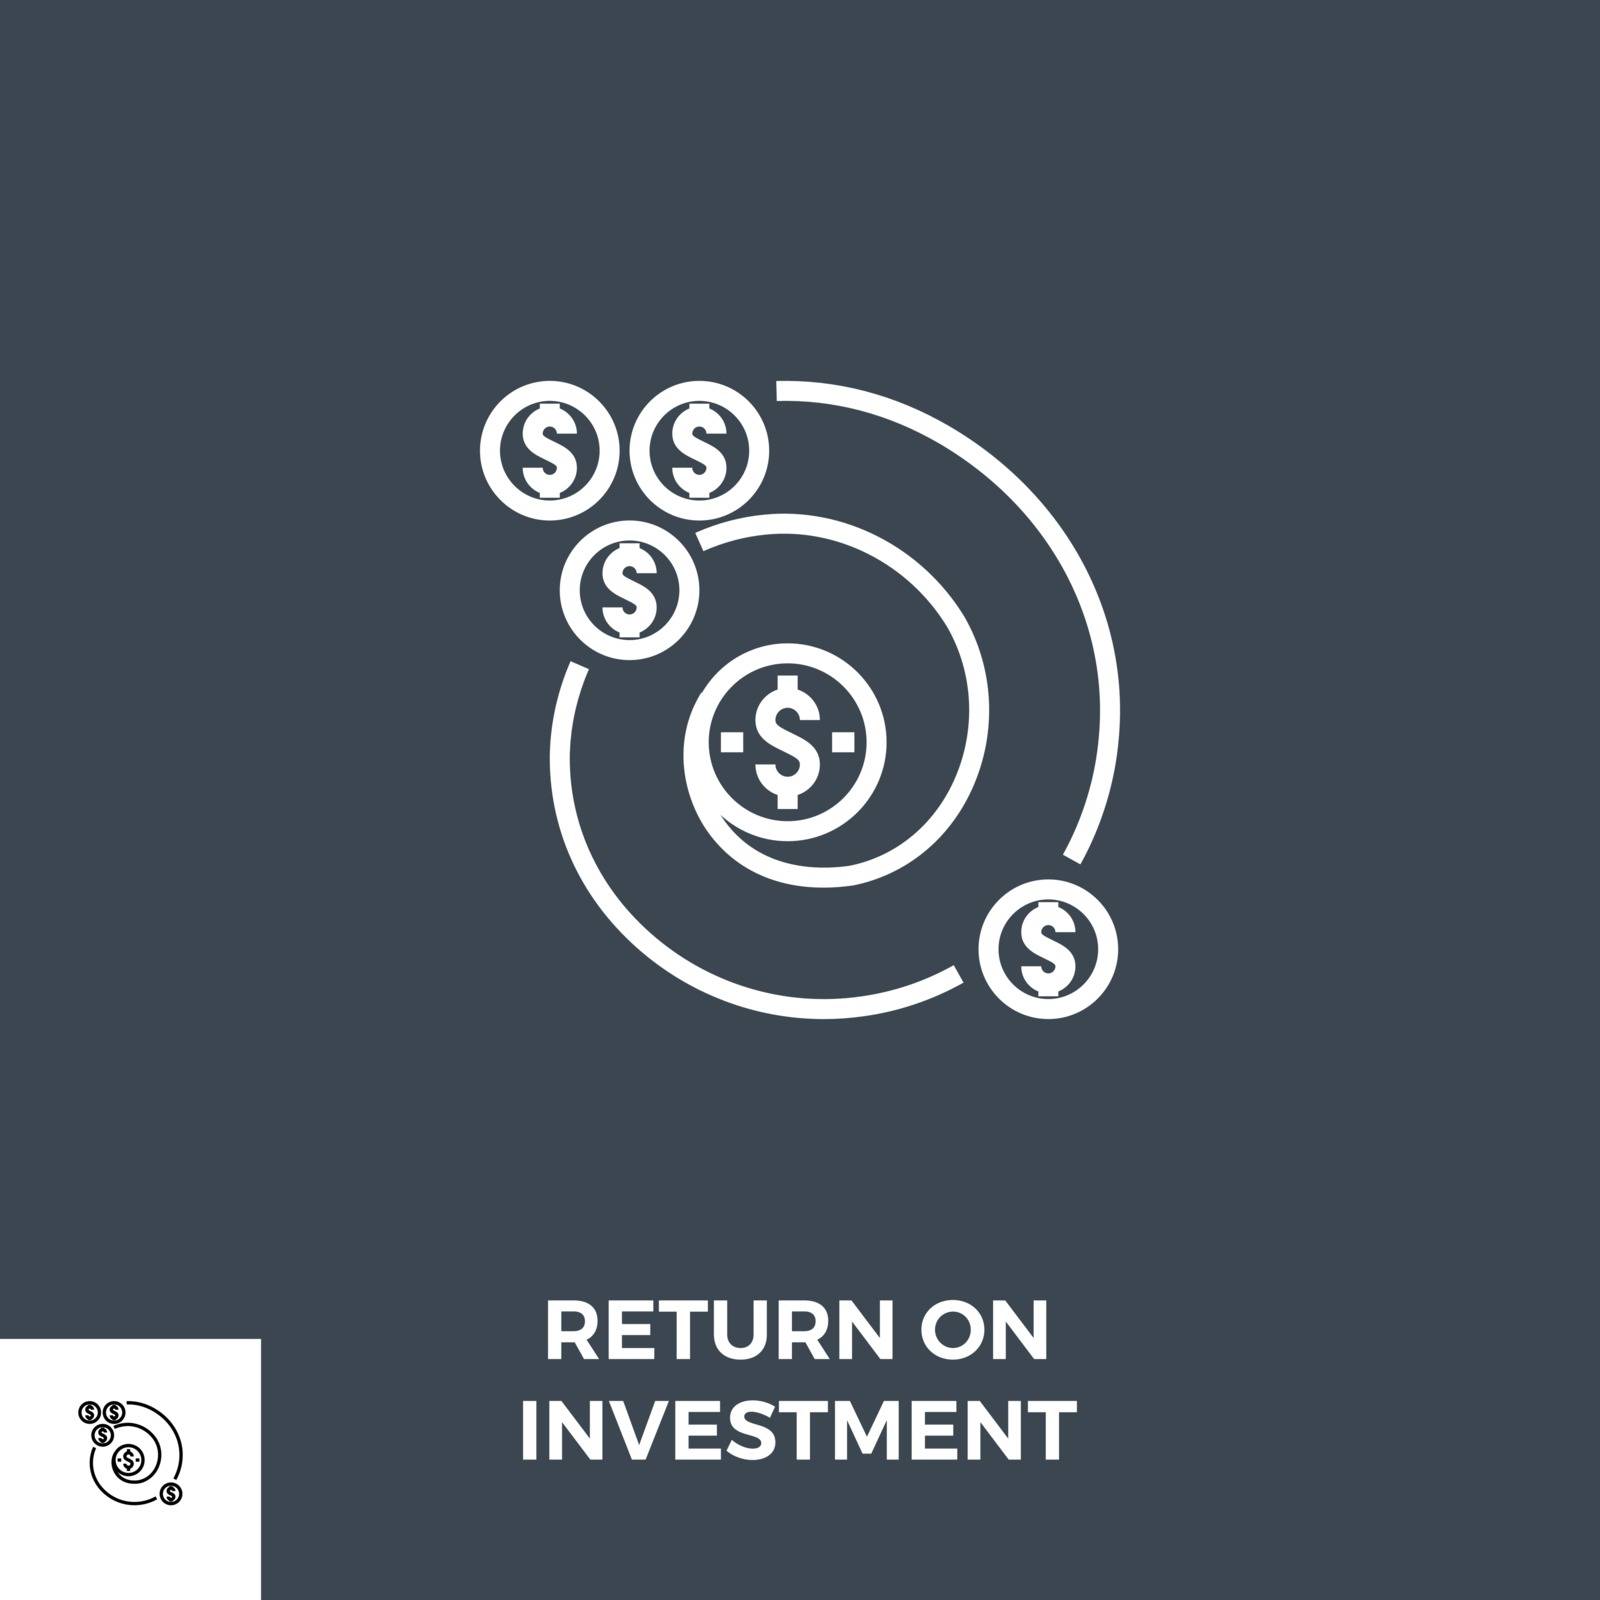 Return on Investment Line Icon by smoki